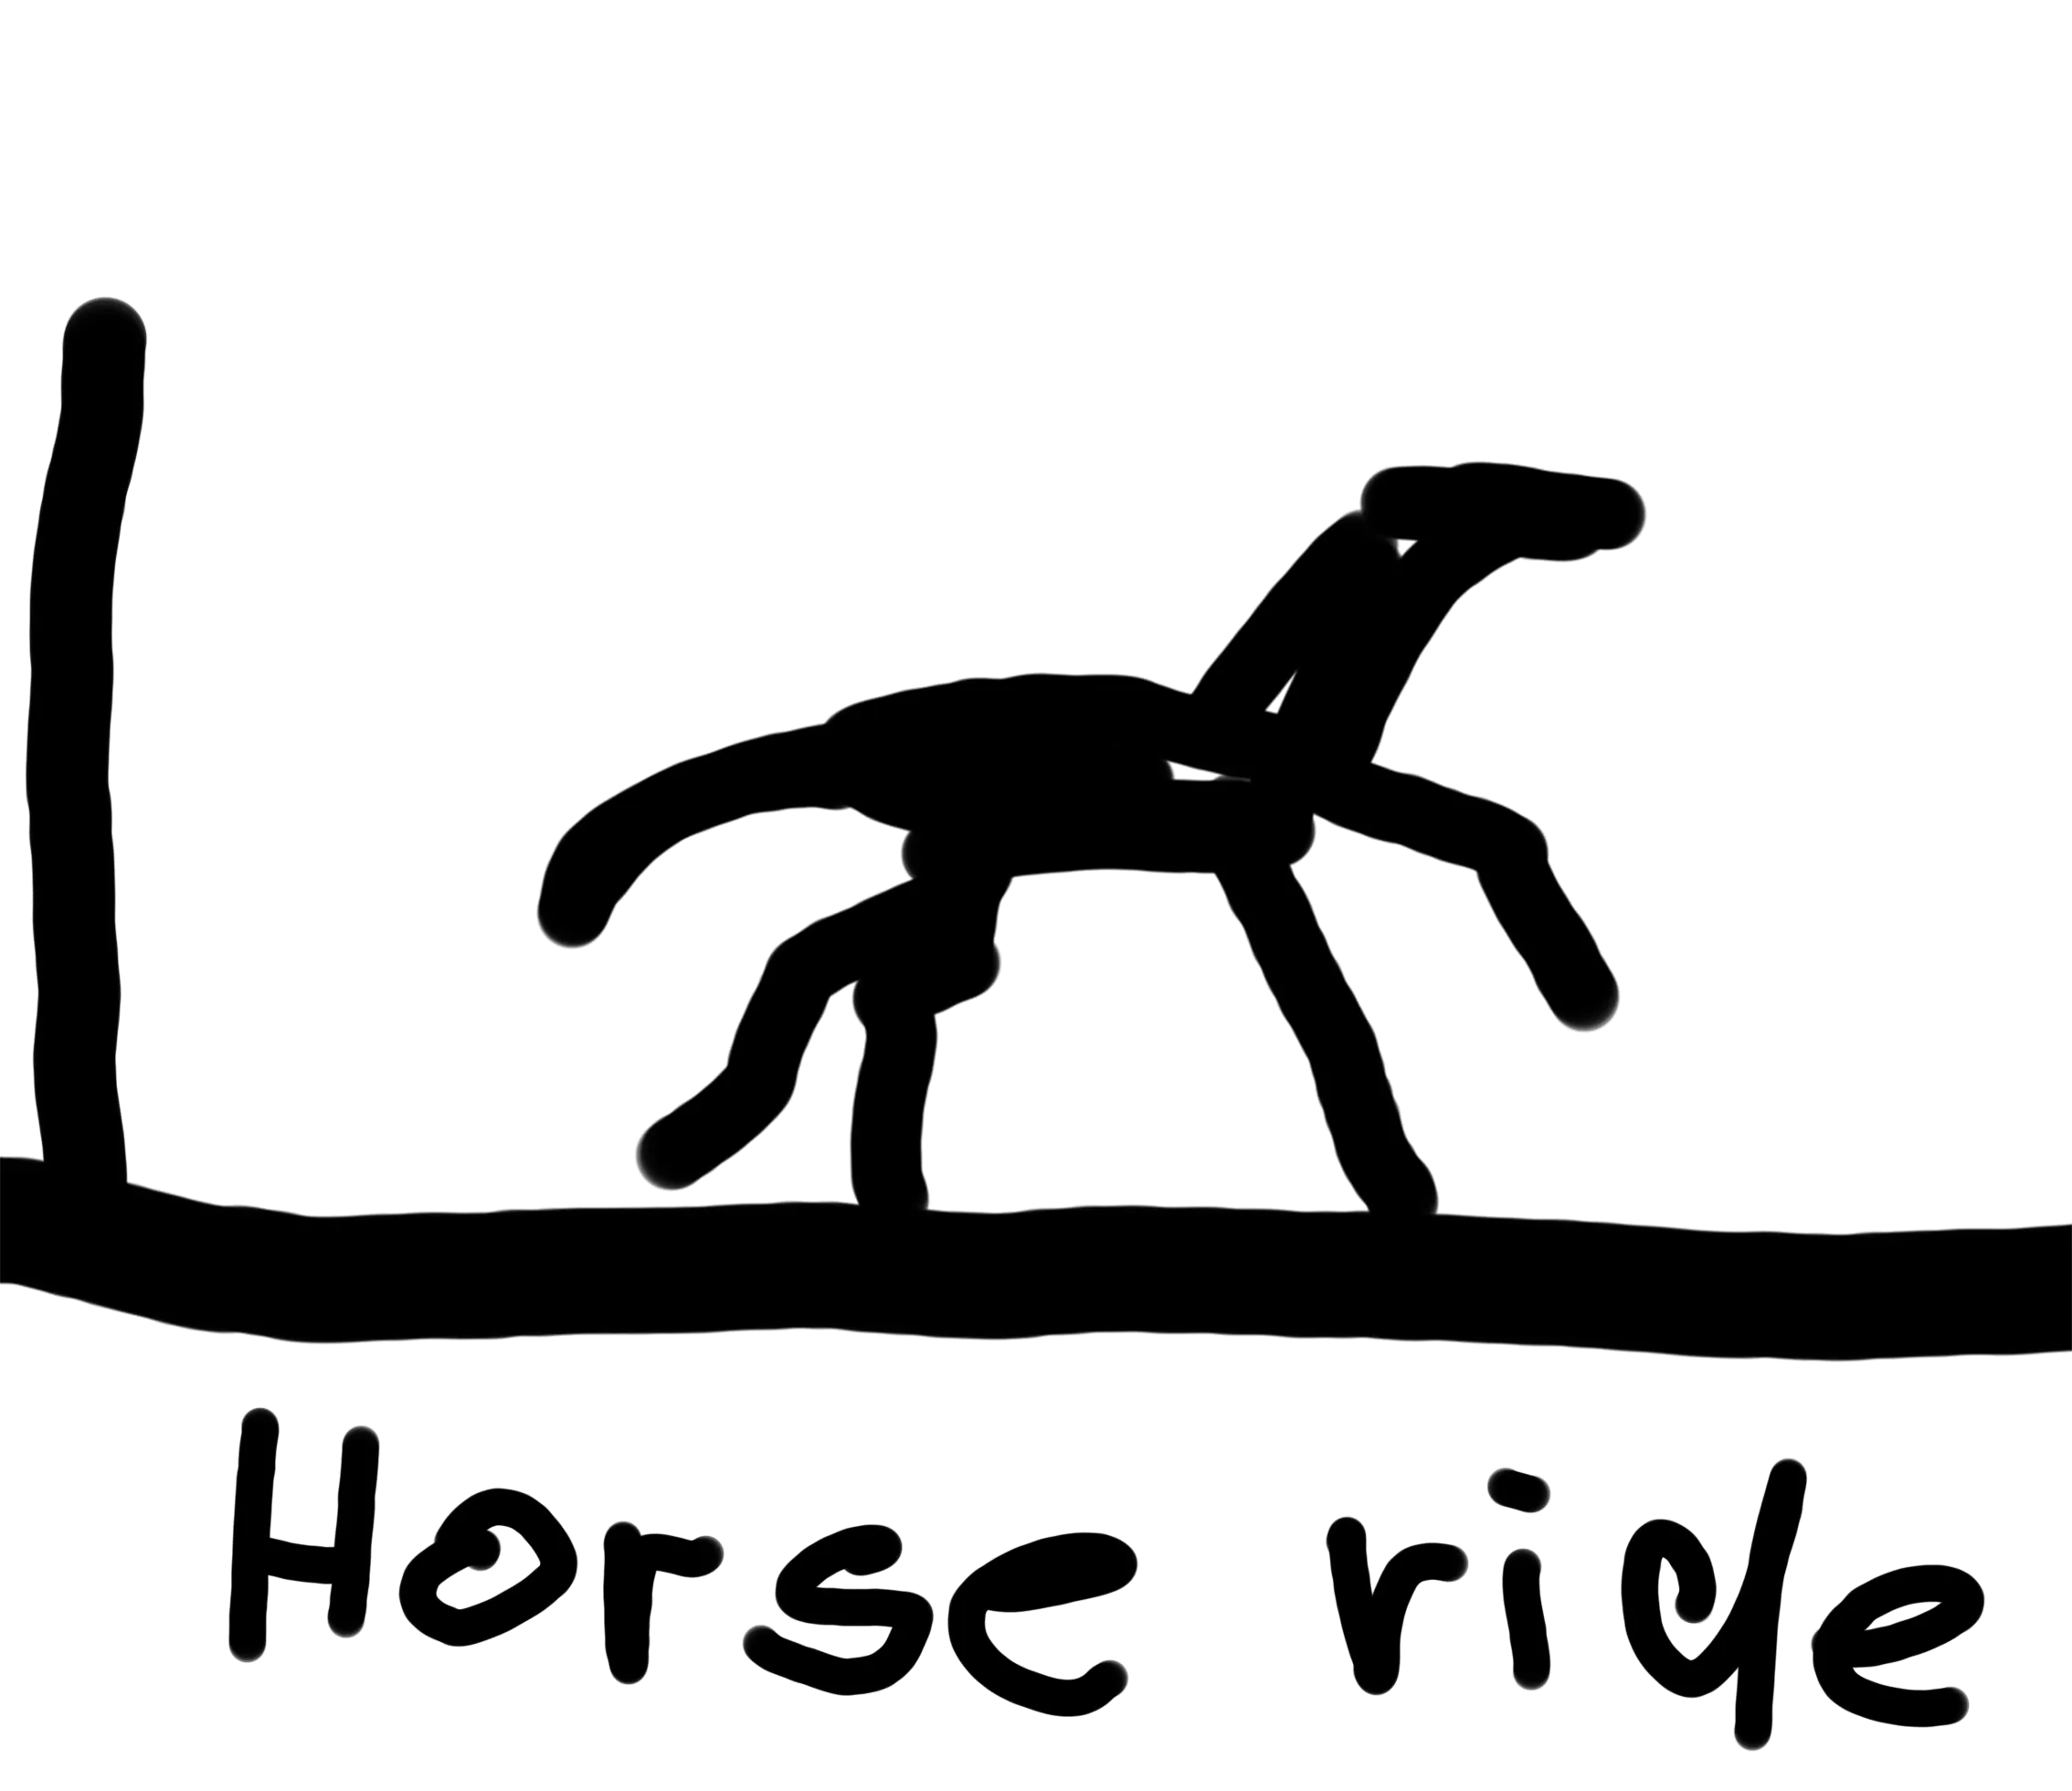 Horse ride